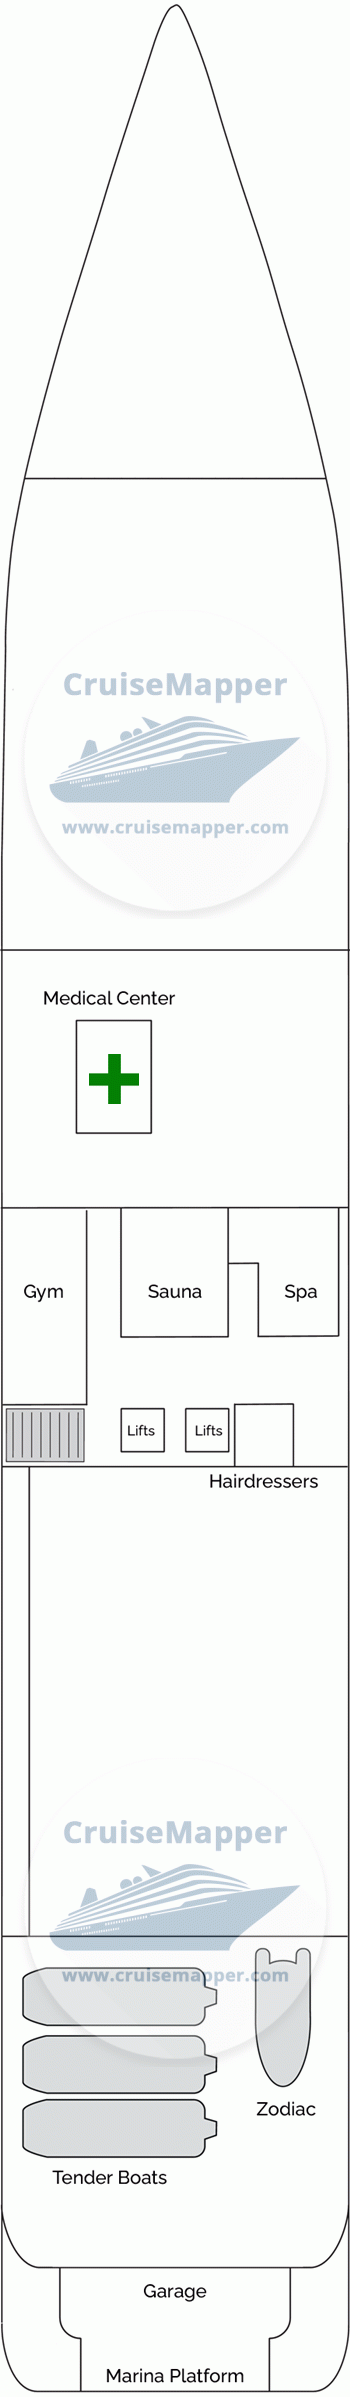 Emerald Sakara Deck 02 - Wellness-Spa-Gym-Hospital-Marina